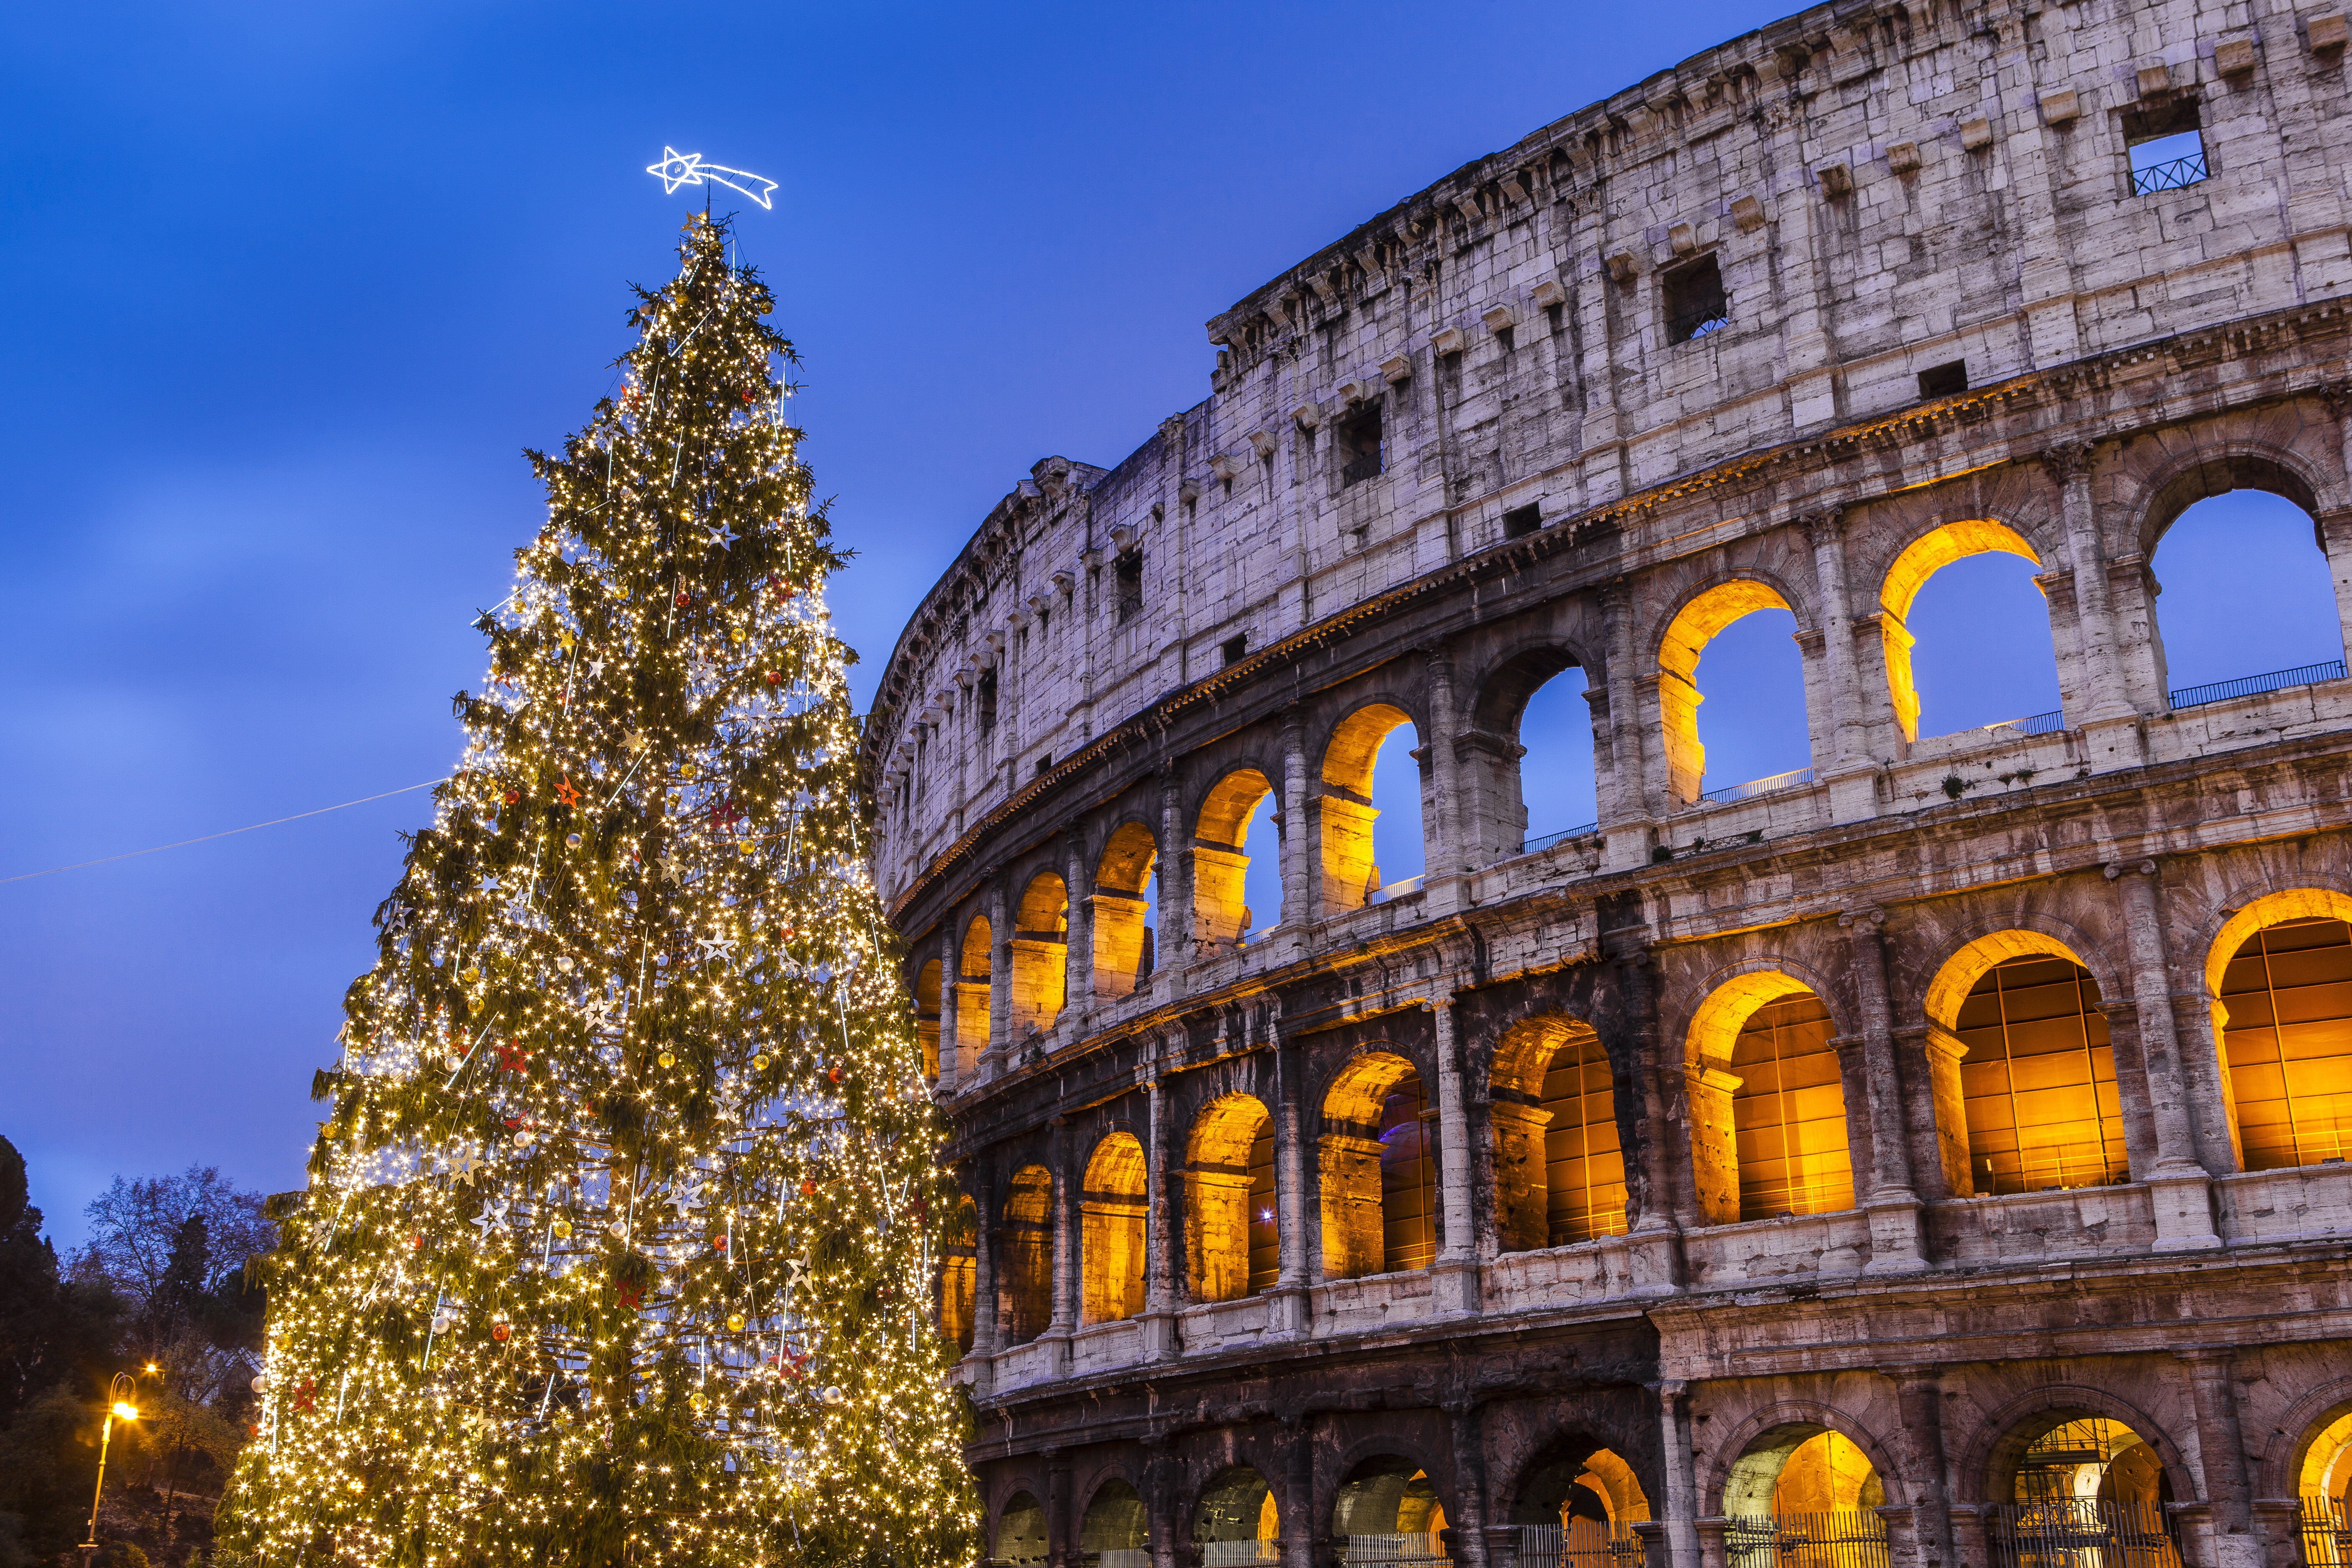 Christmas tree at Colosseum at dusk.